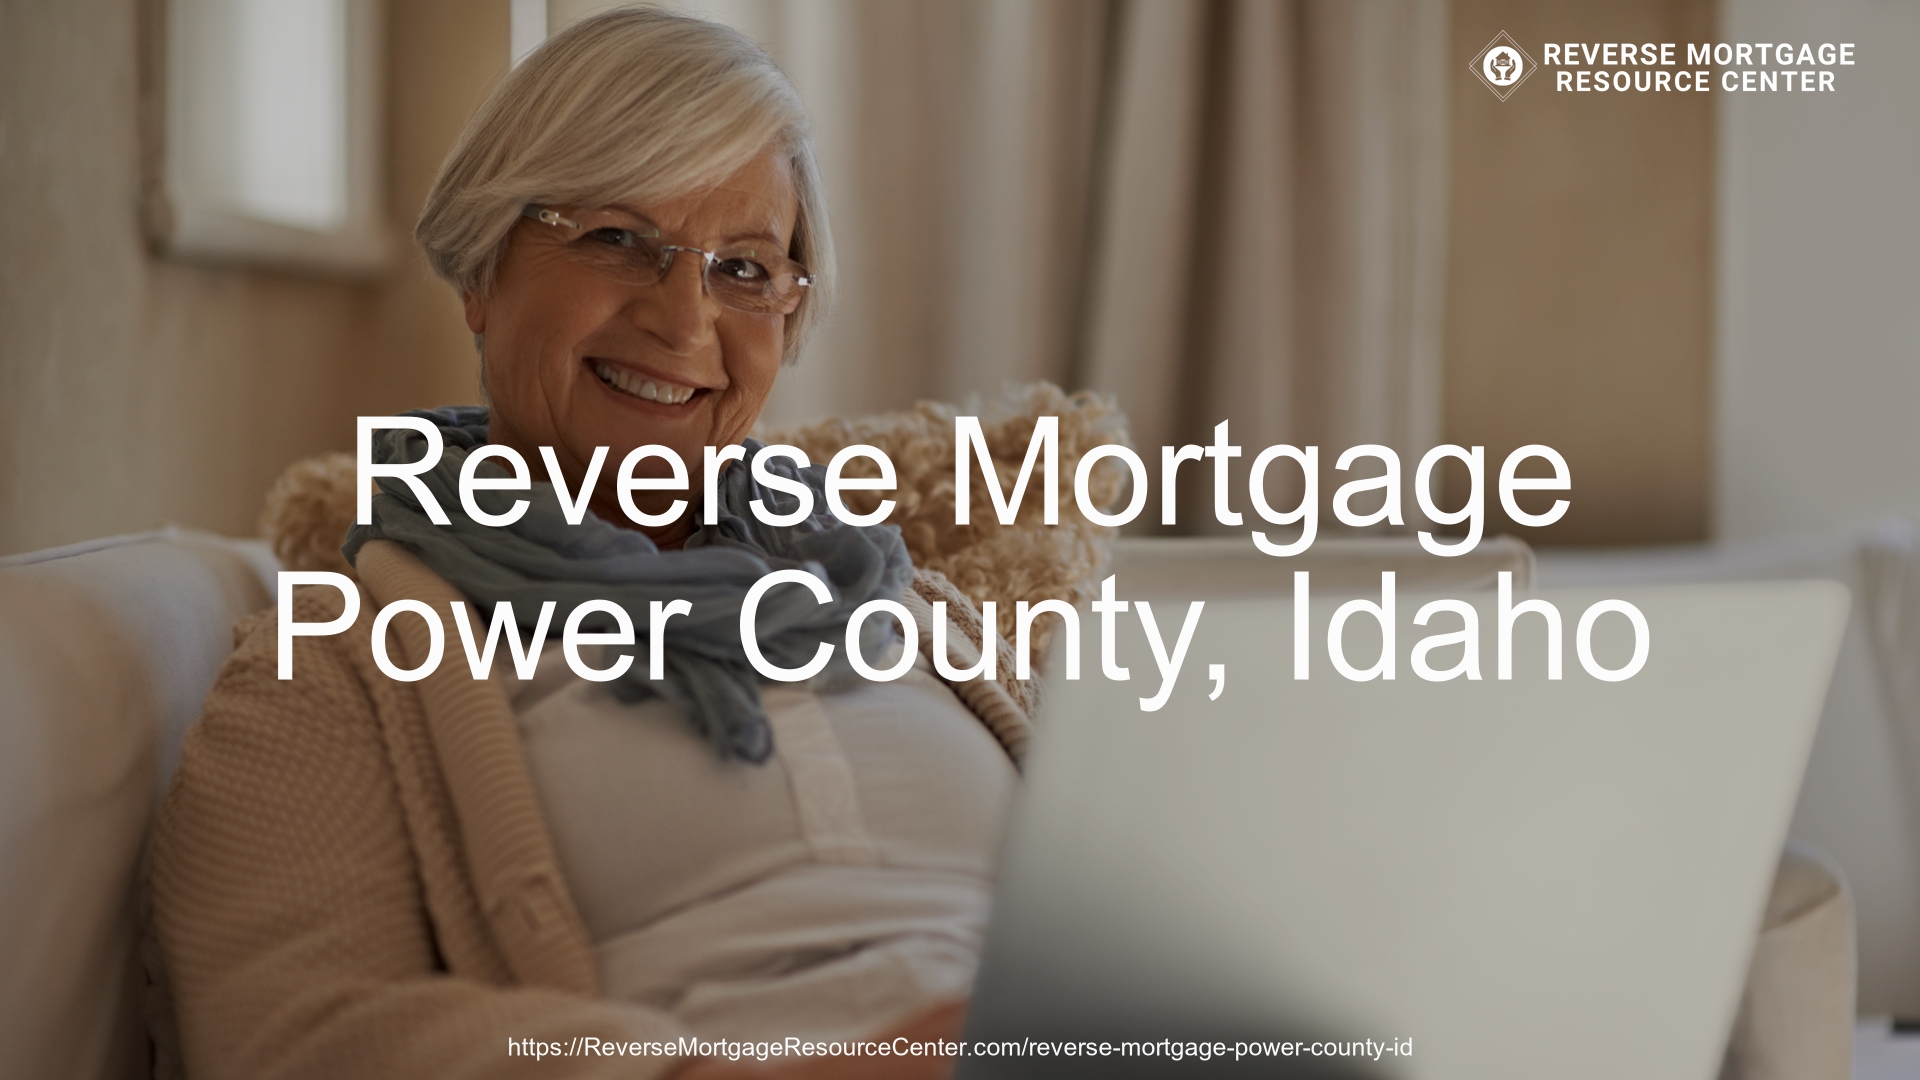 Reverse Mortgage Loans in Power County Idaho